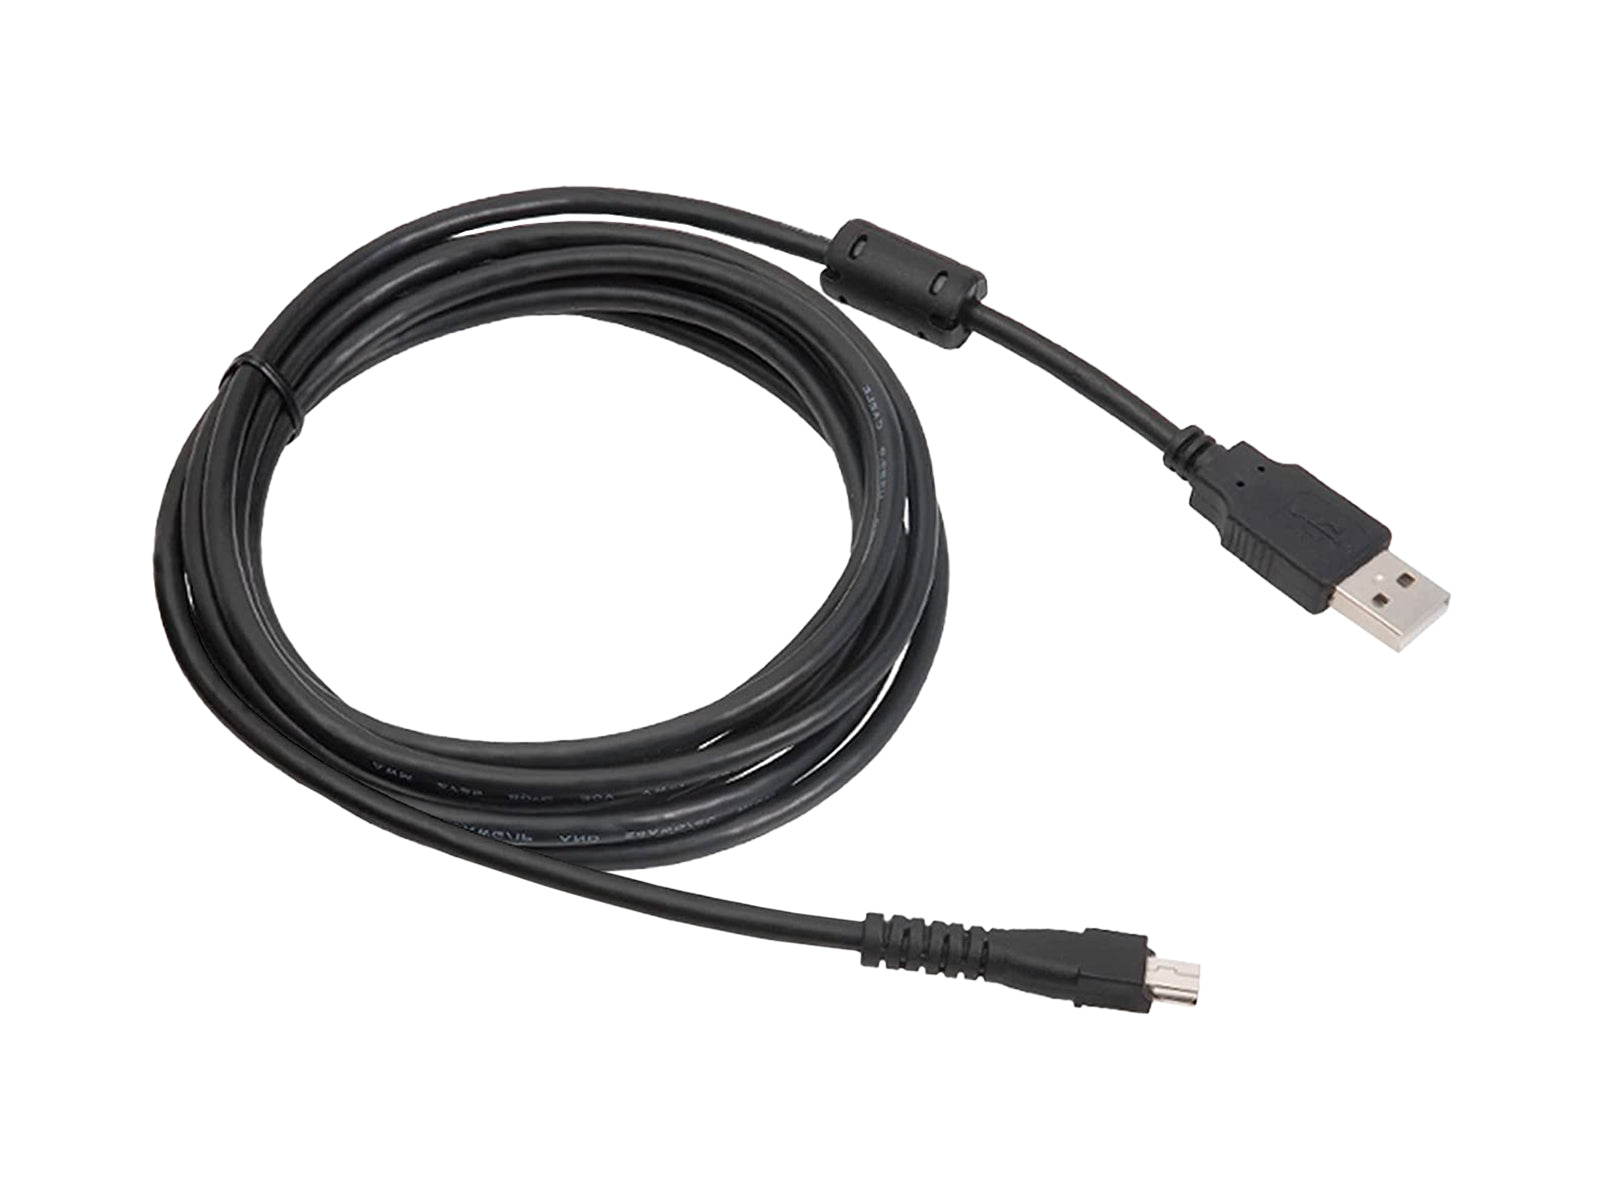 Cable USB de repuesto Philips para micrófonos Speechmike - 8 pies | 2.4 m (ACC0034) Monitores.com